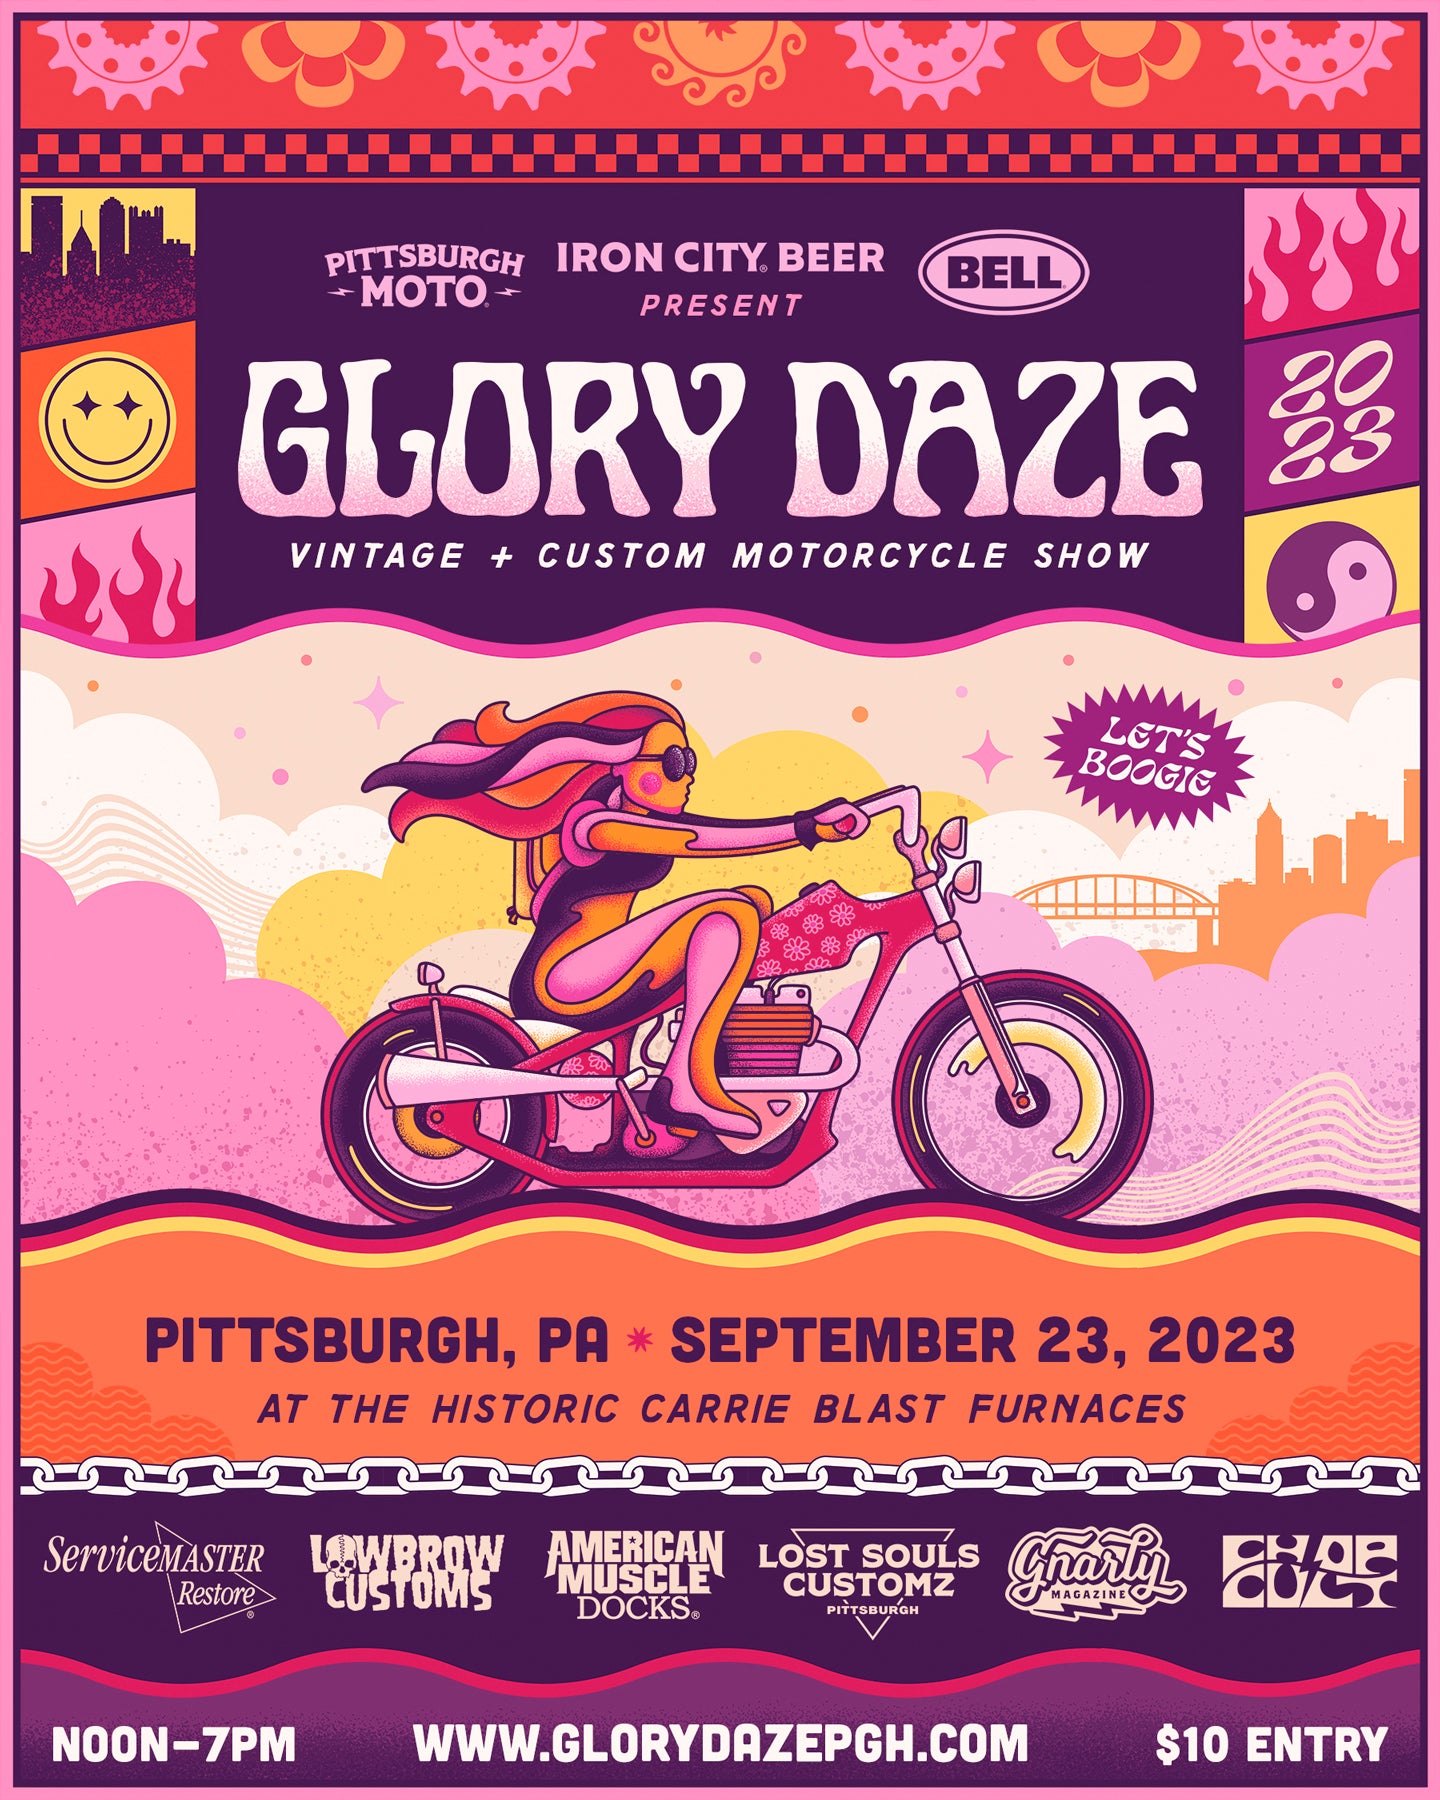 Kurt Diserio artist designer animated illustration poster Glory Daze motorcycle show pittsburgh